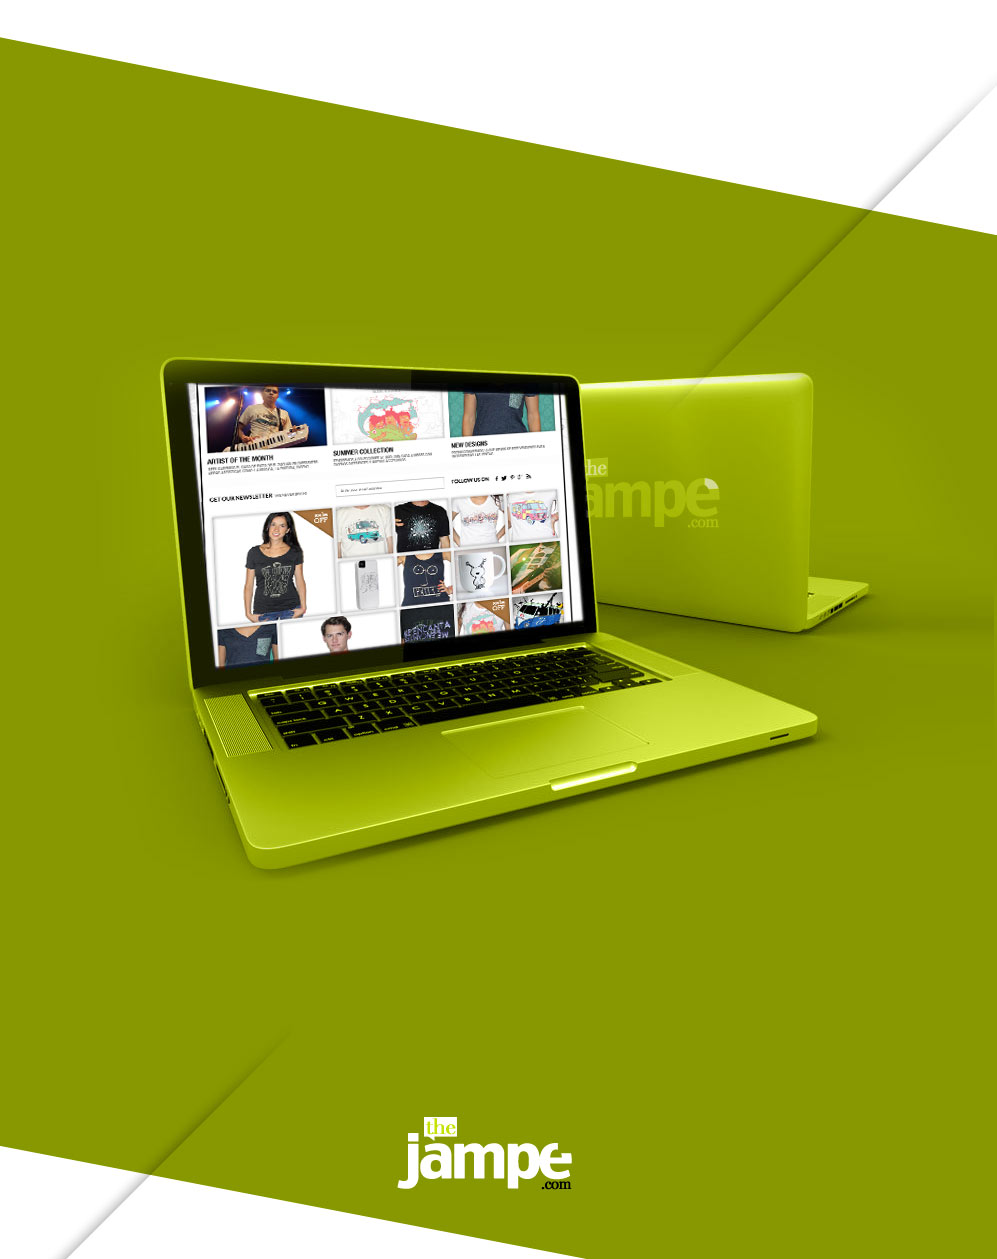 online store website the-jampe-online-store-web-design-redesing-agency-cool-tshirt-caso-de-exito-pan-y-miel